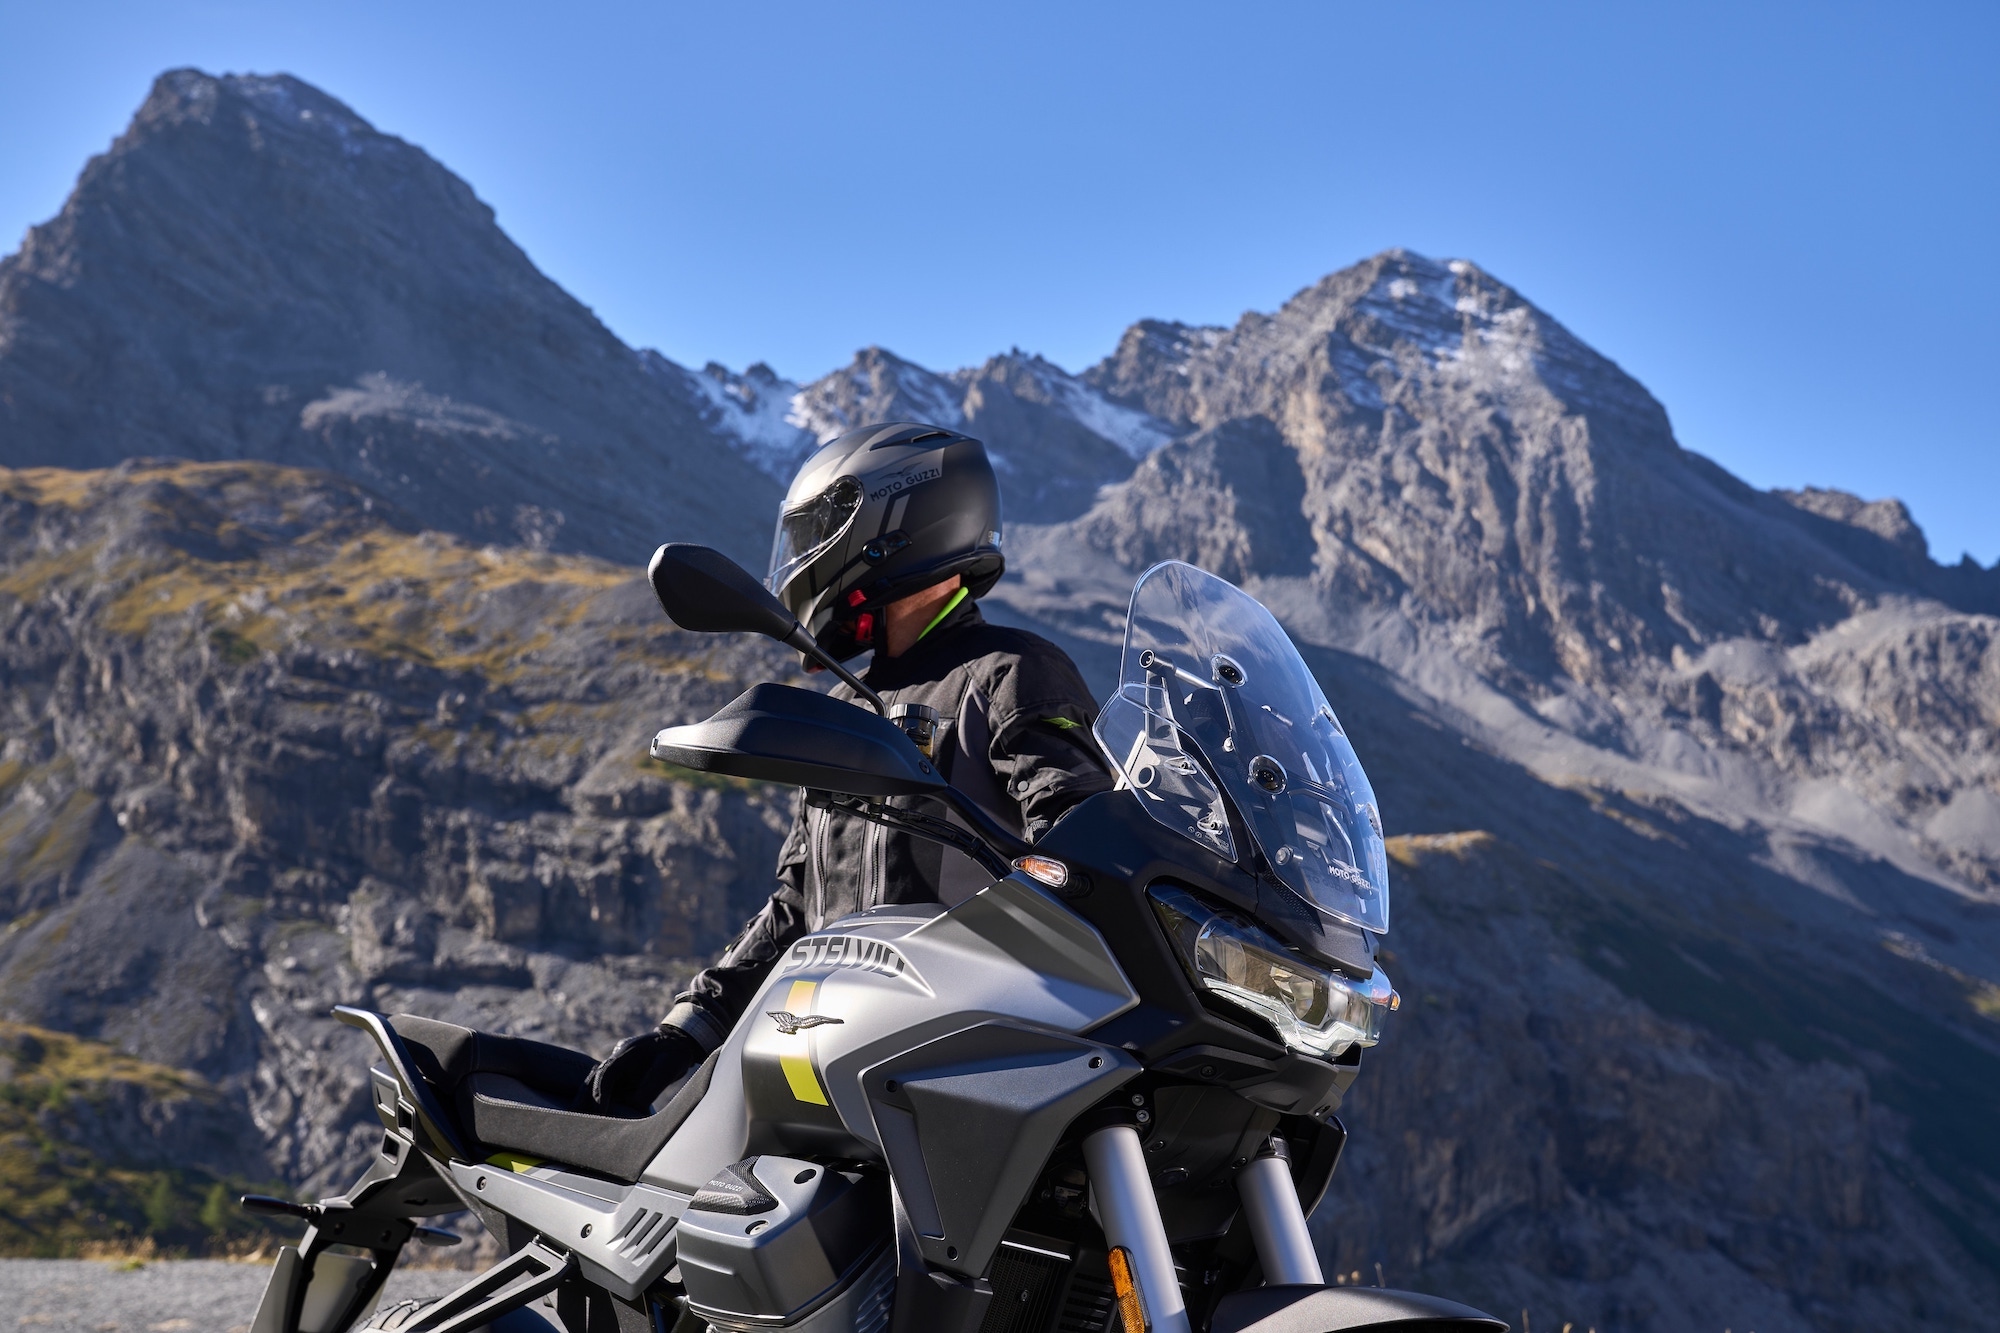 A view of Moto Guzzi's new Stelvio. All media provided by Moto Guzzi.